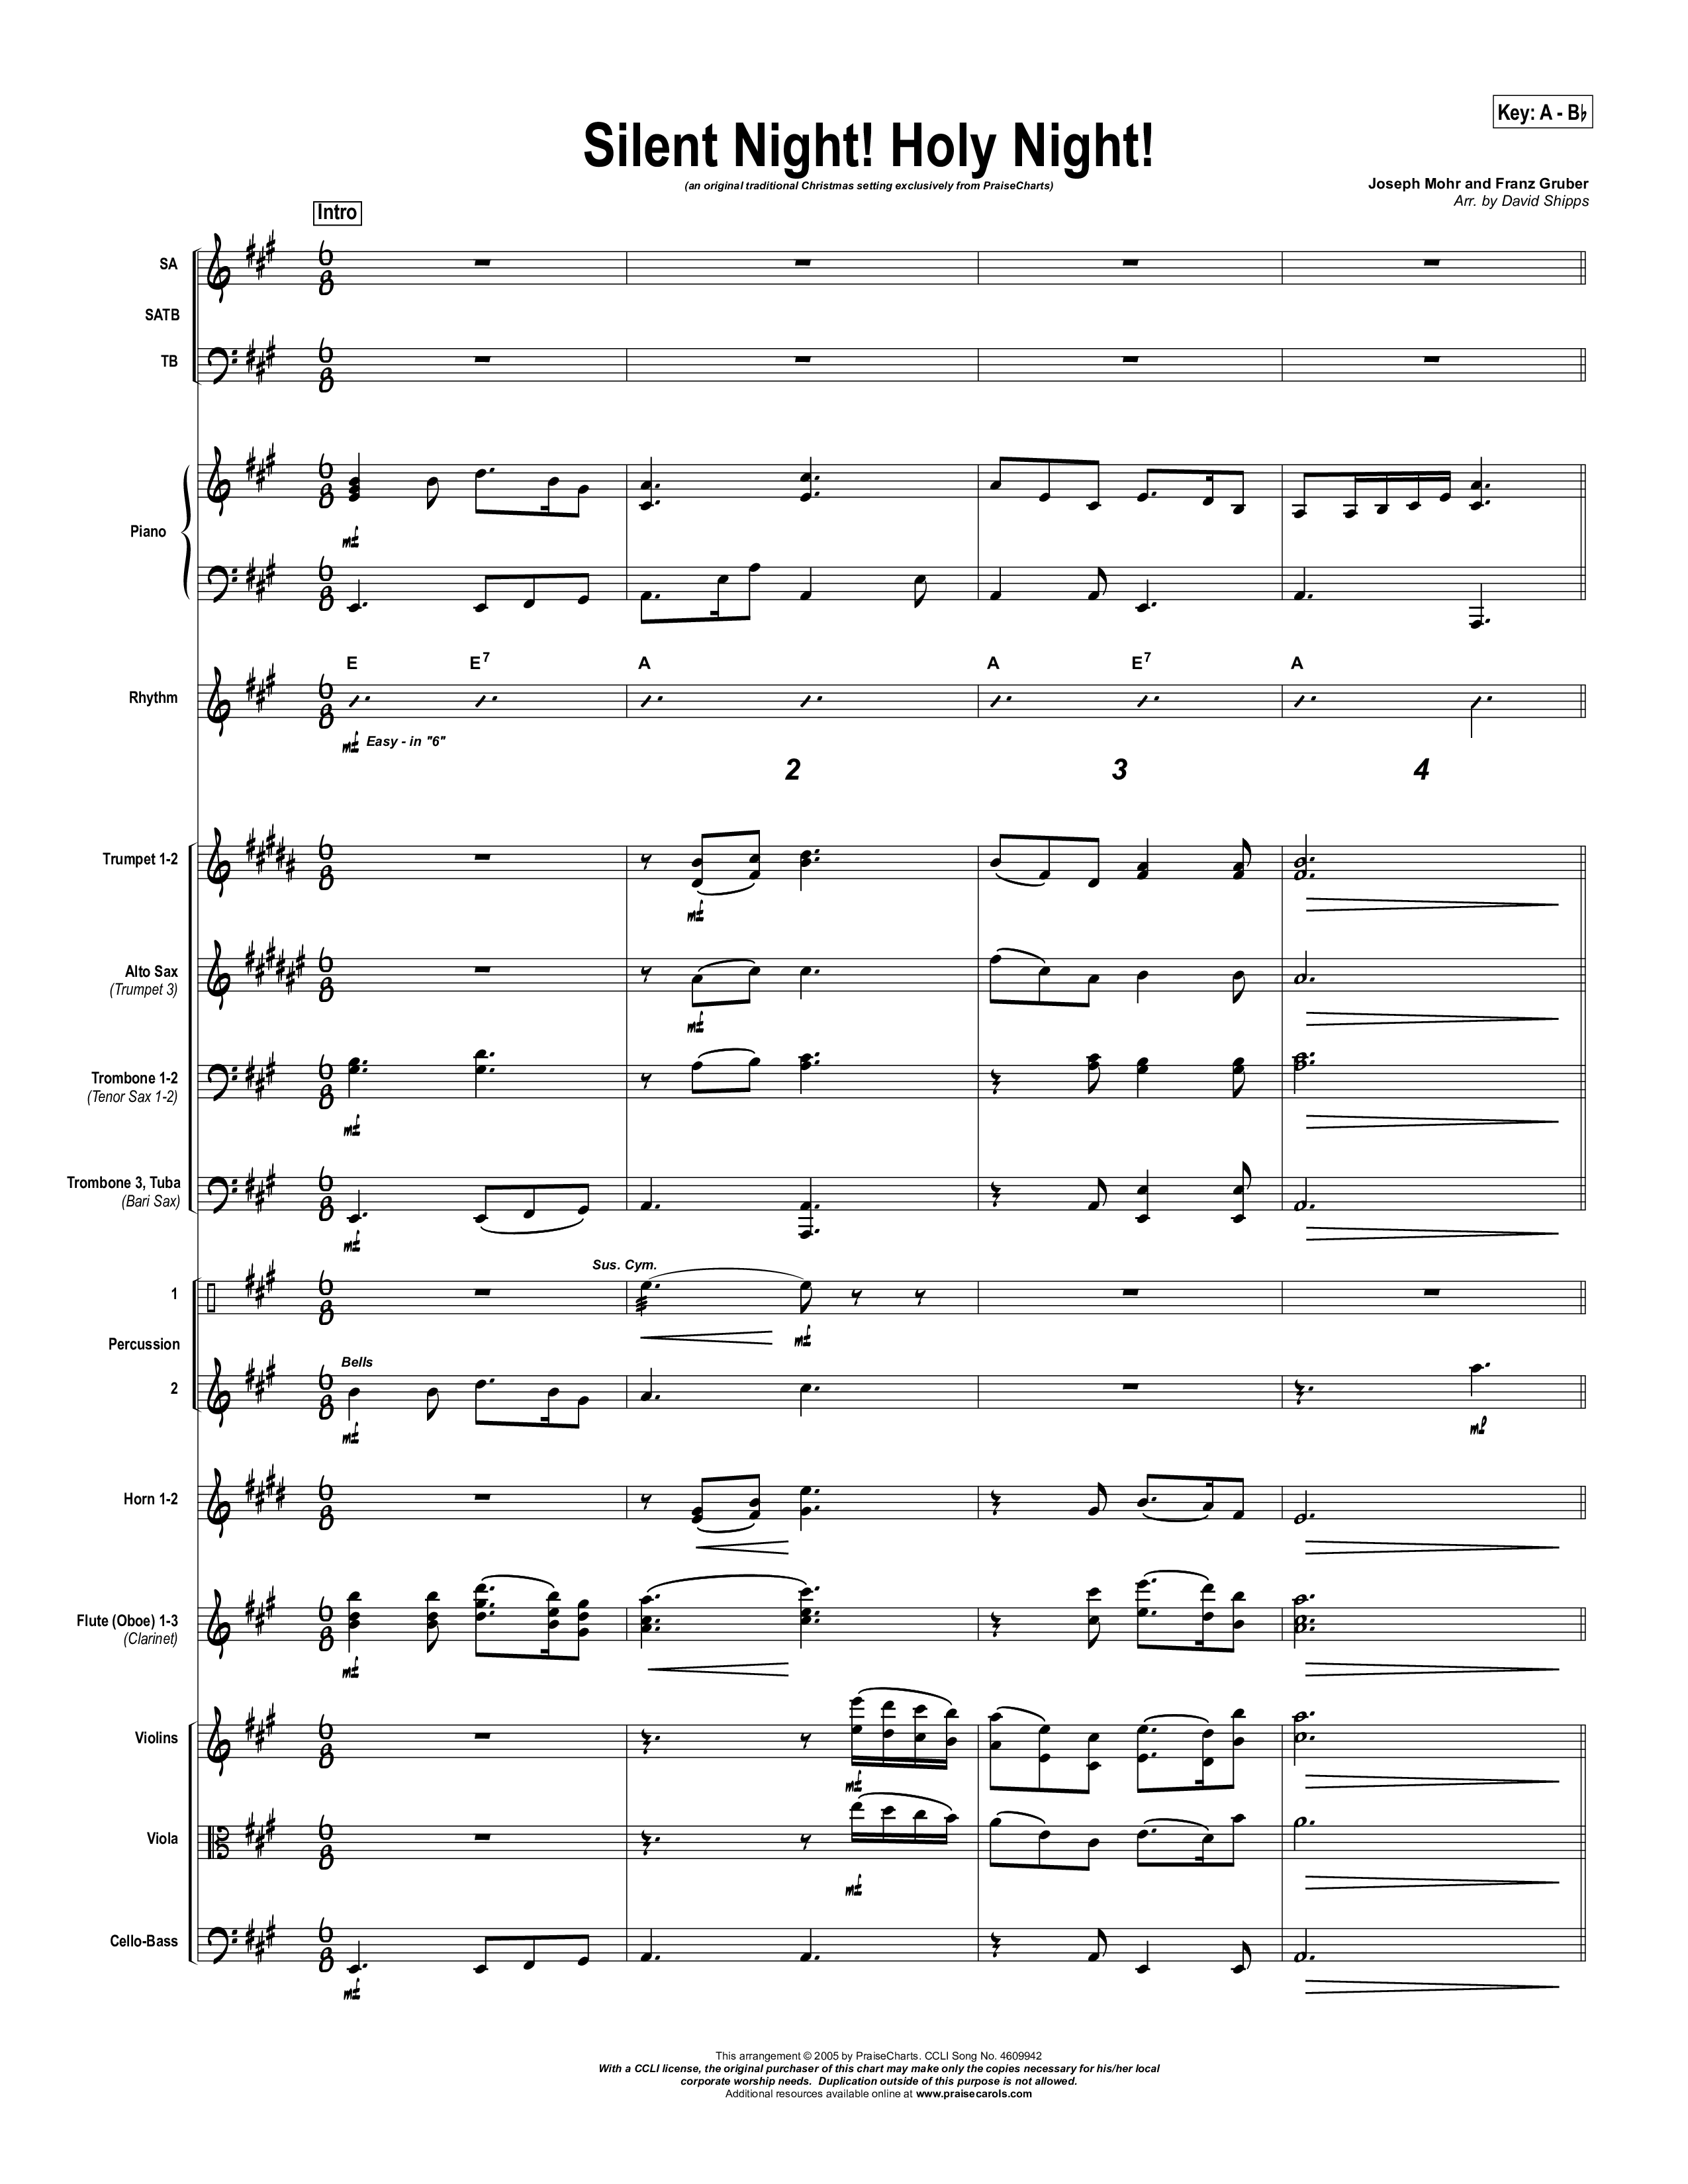 Silent Night Conductor's Score (Traditional Carol / PraiseCharts)